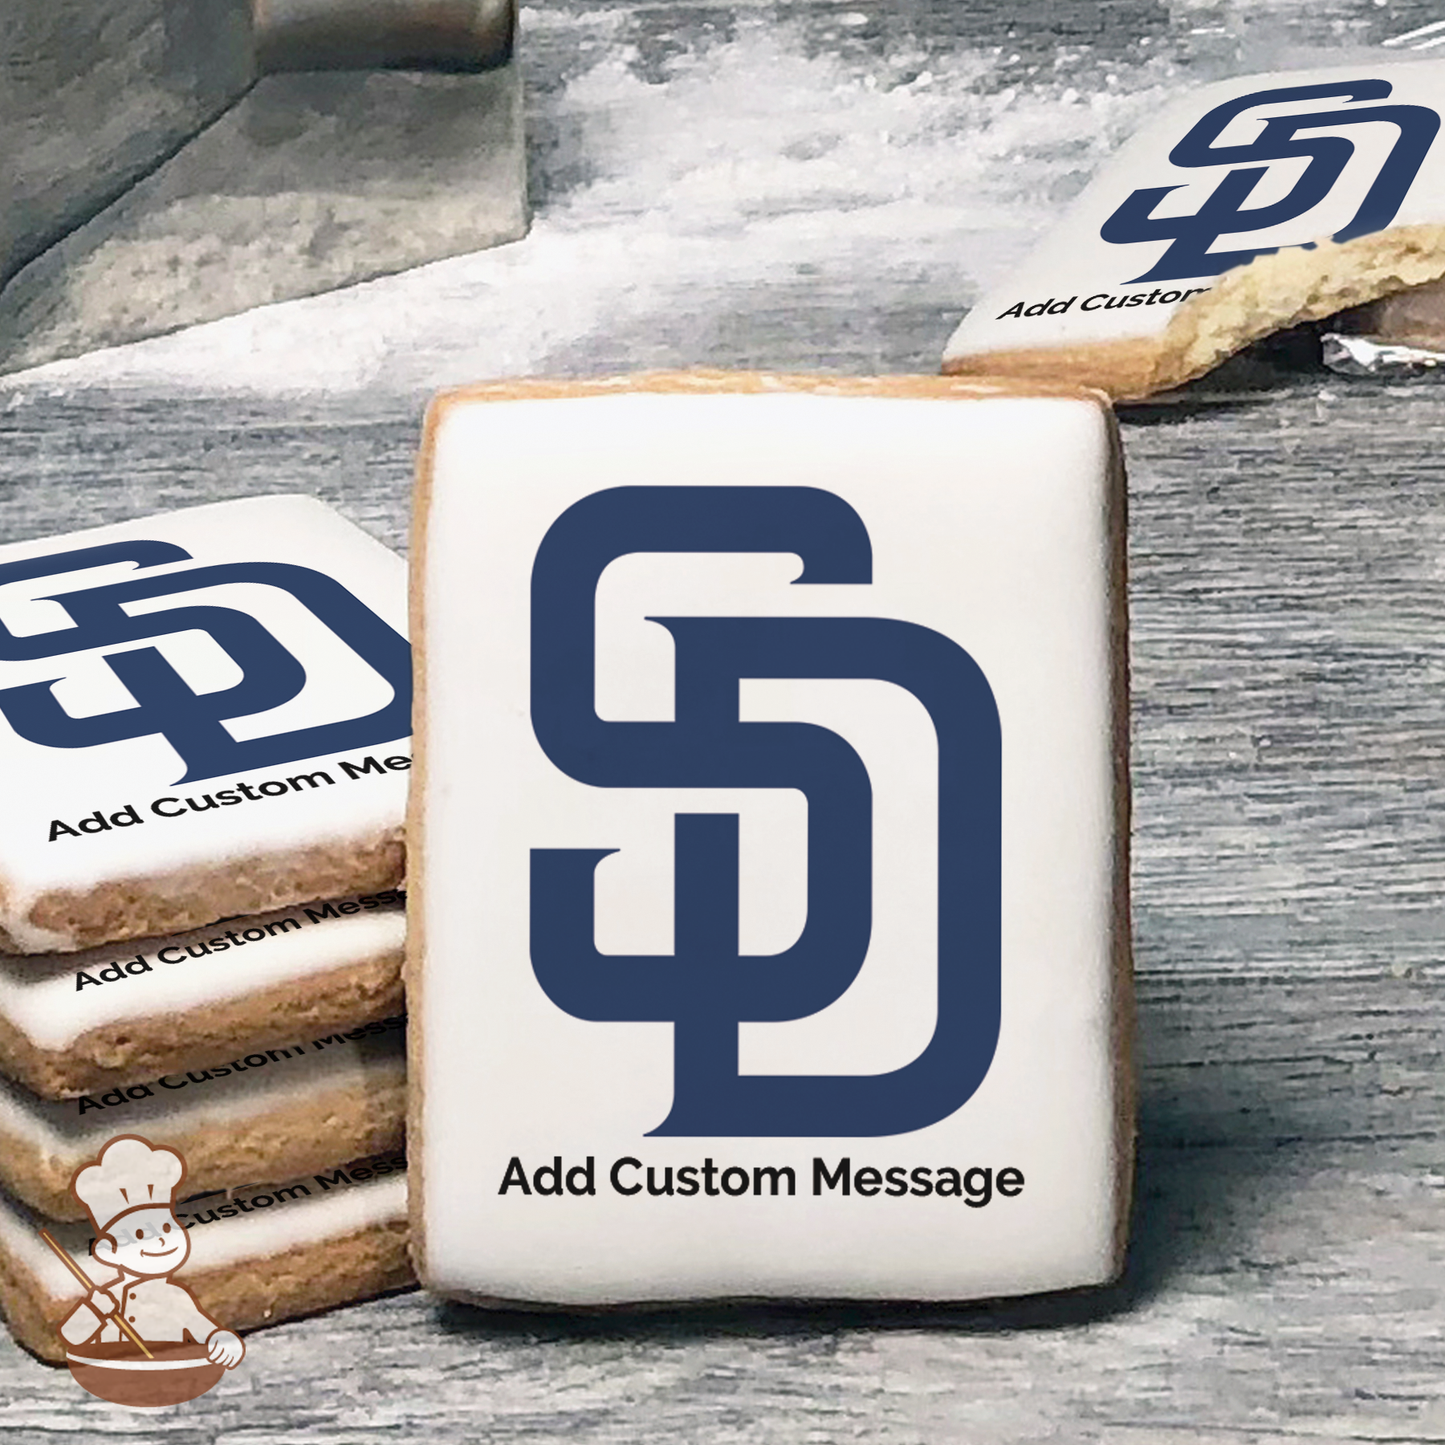 MLB San Diego Padres Custom Message Cookies (Rectangle)